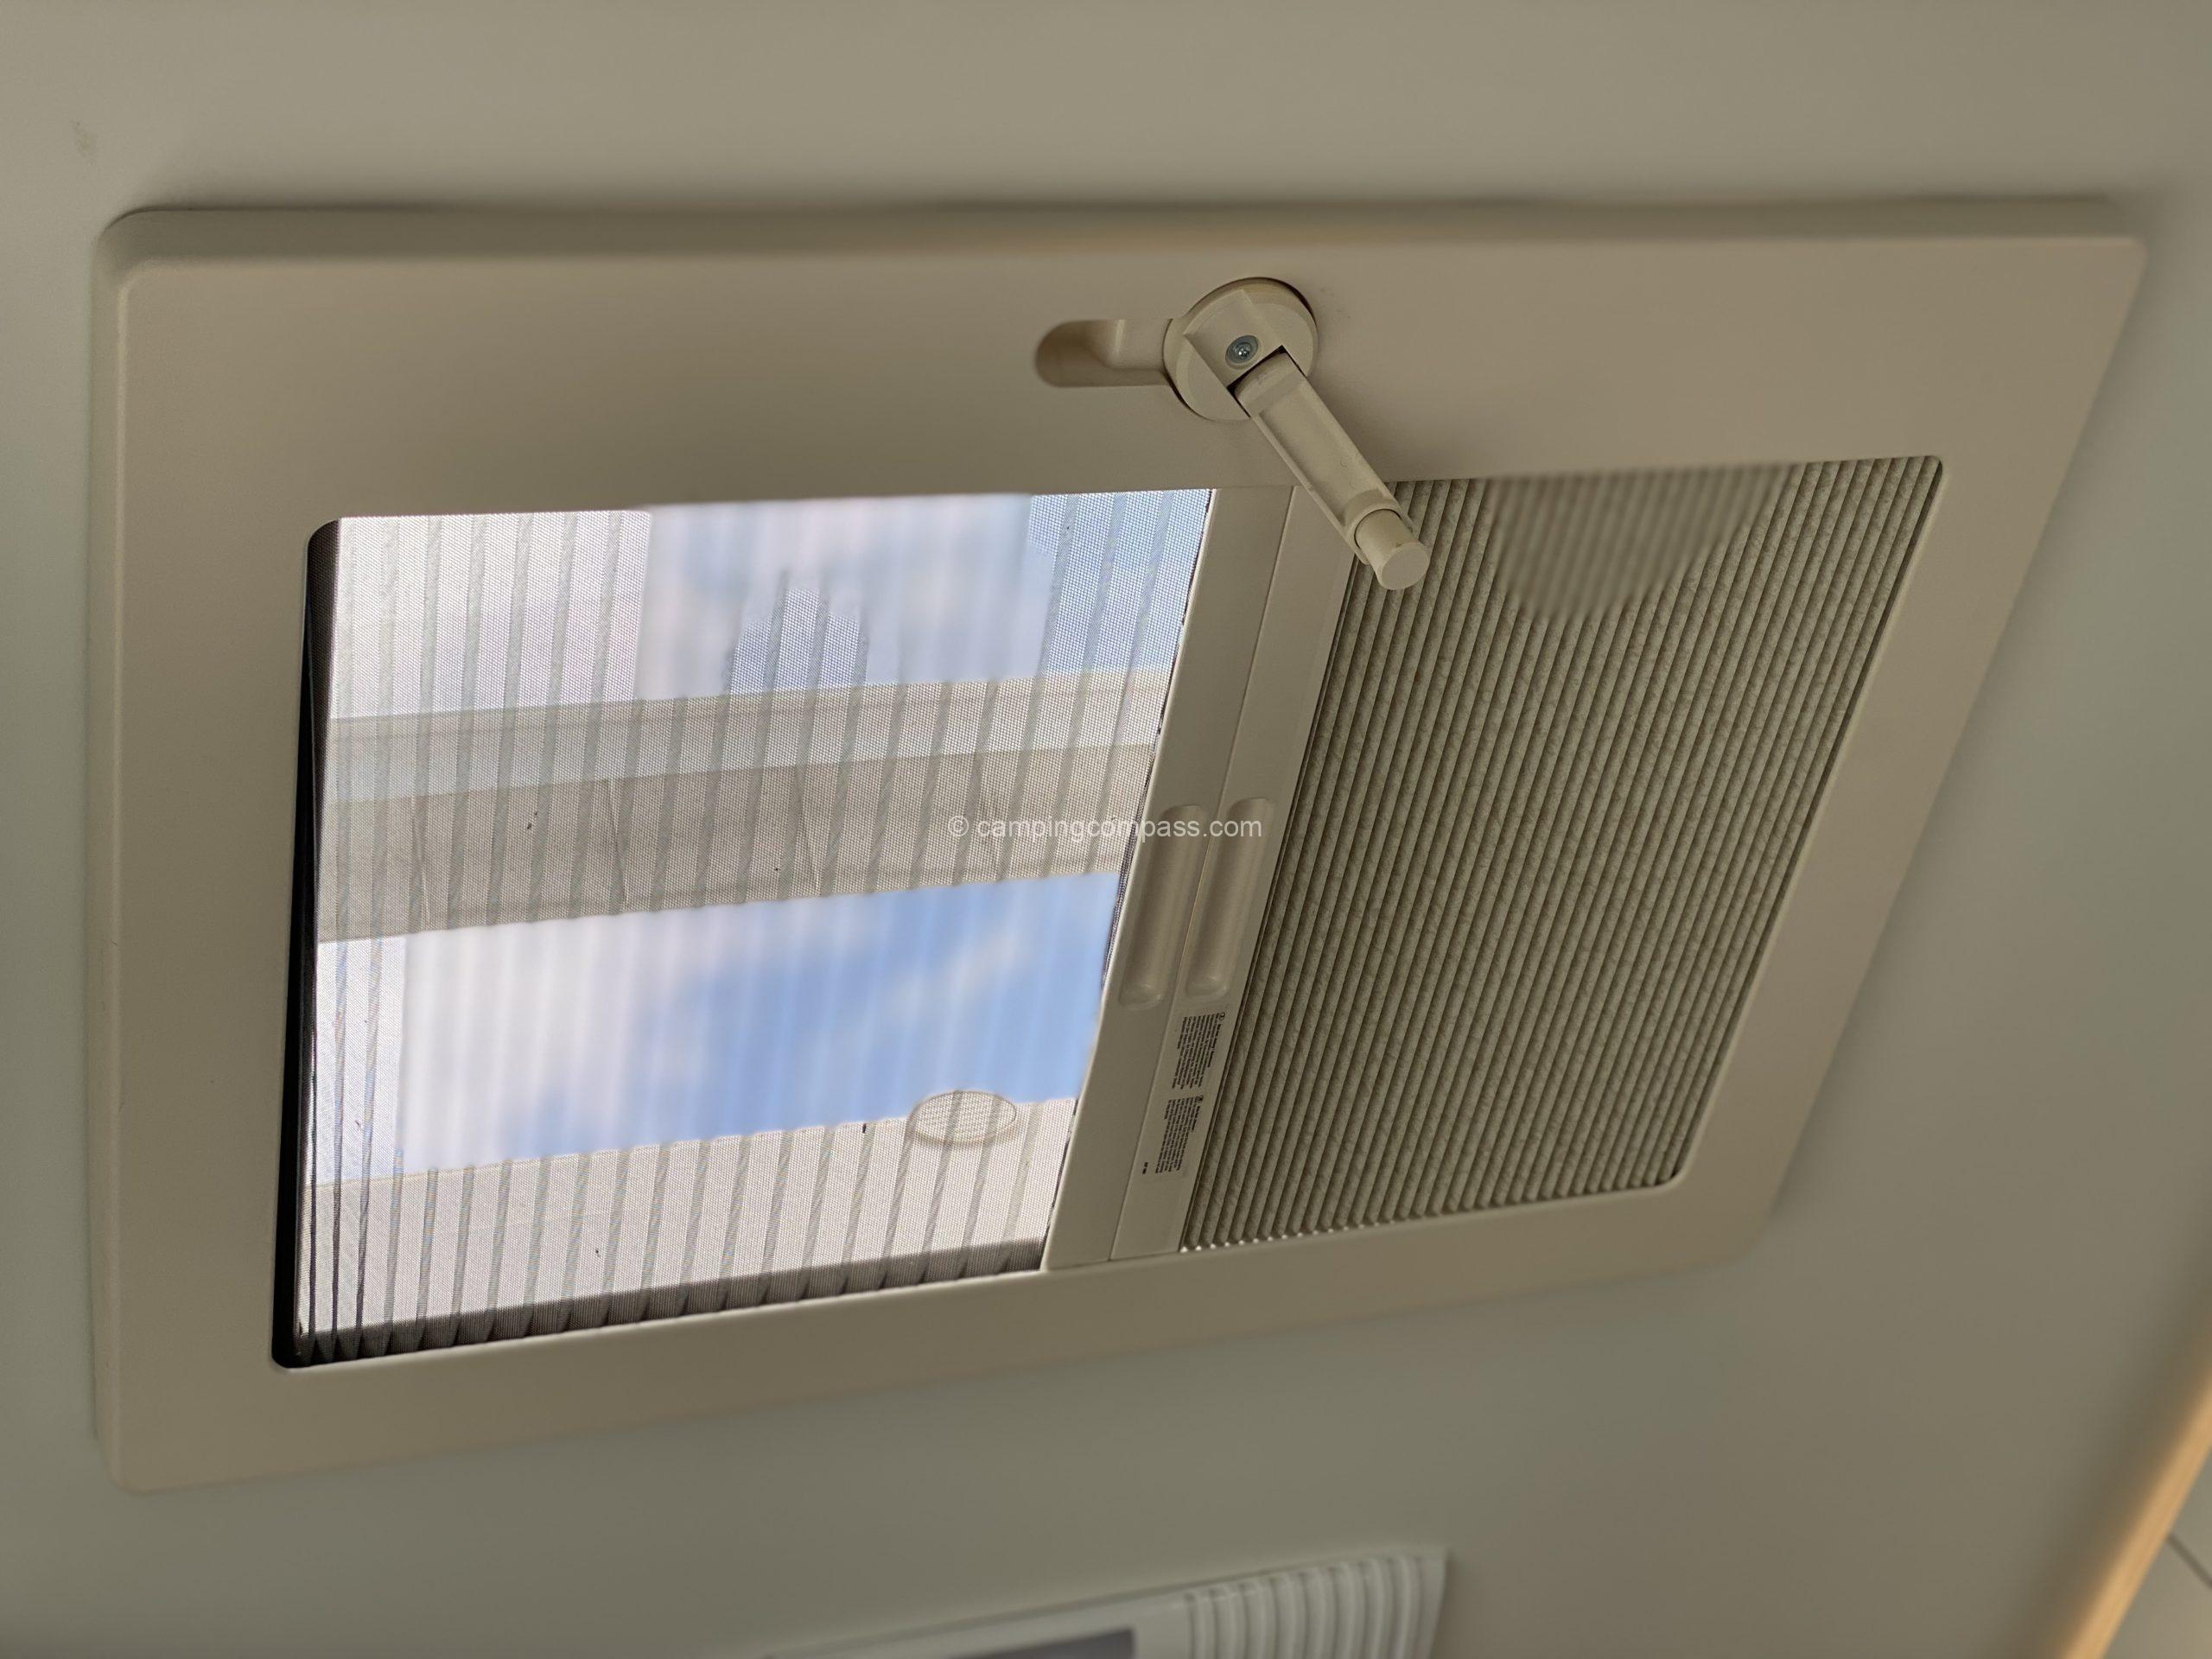 Motorhome windows and ventilation